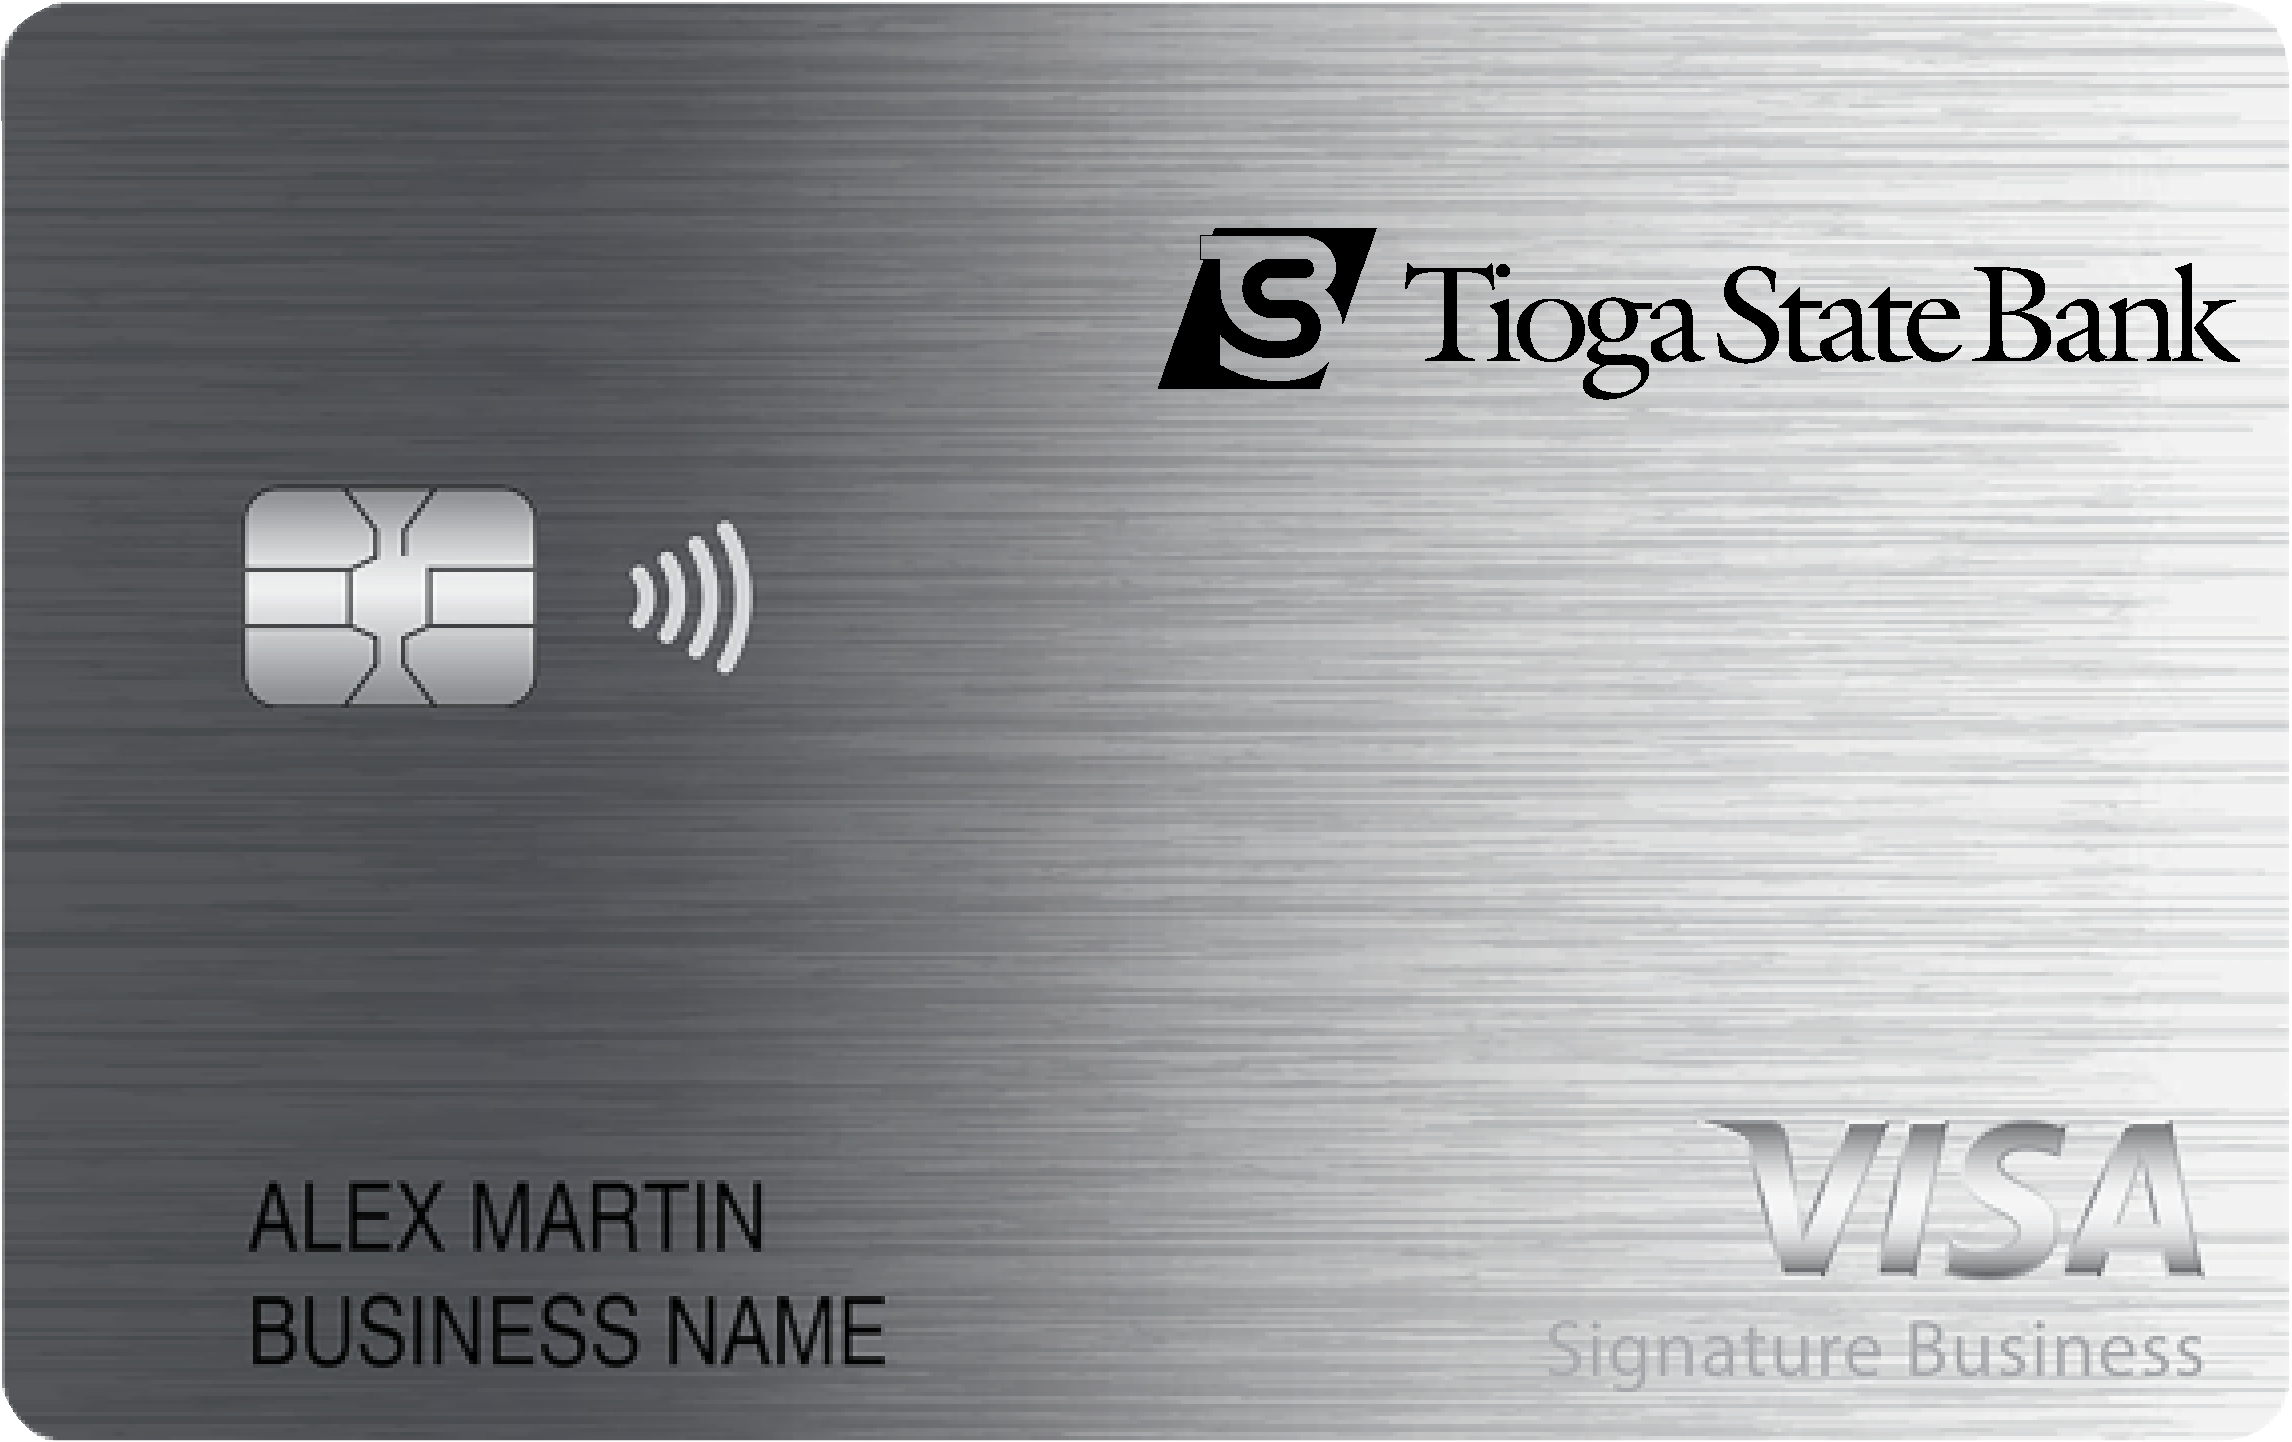 Tioga State Bank Smart Business Rewards Card